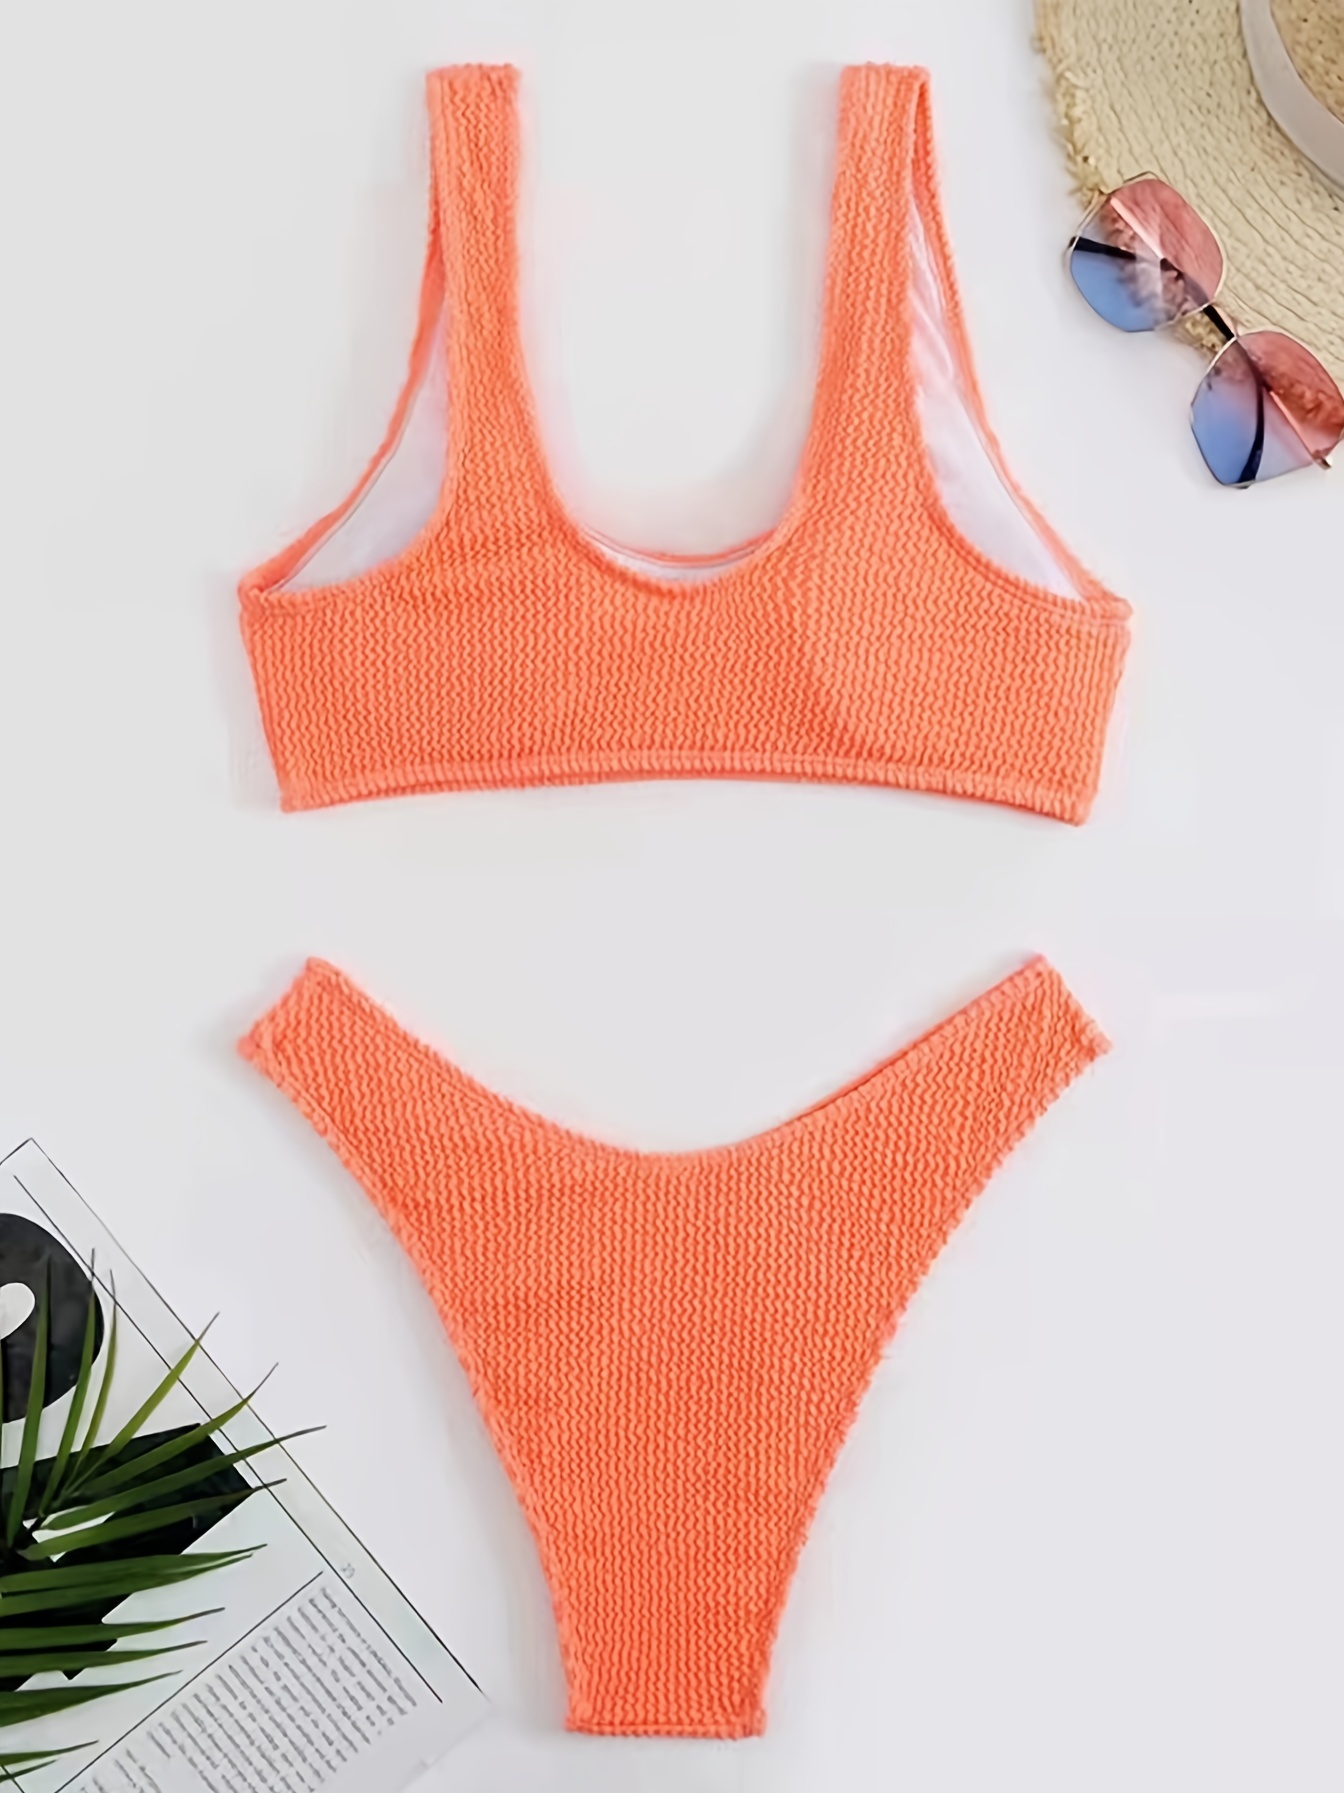 ZAFUL for Women High Cut Scoop Neck Bikini Set Orange M